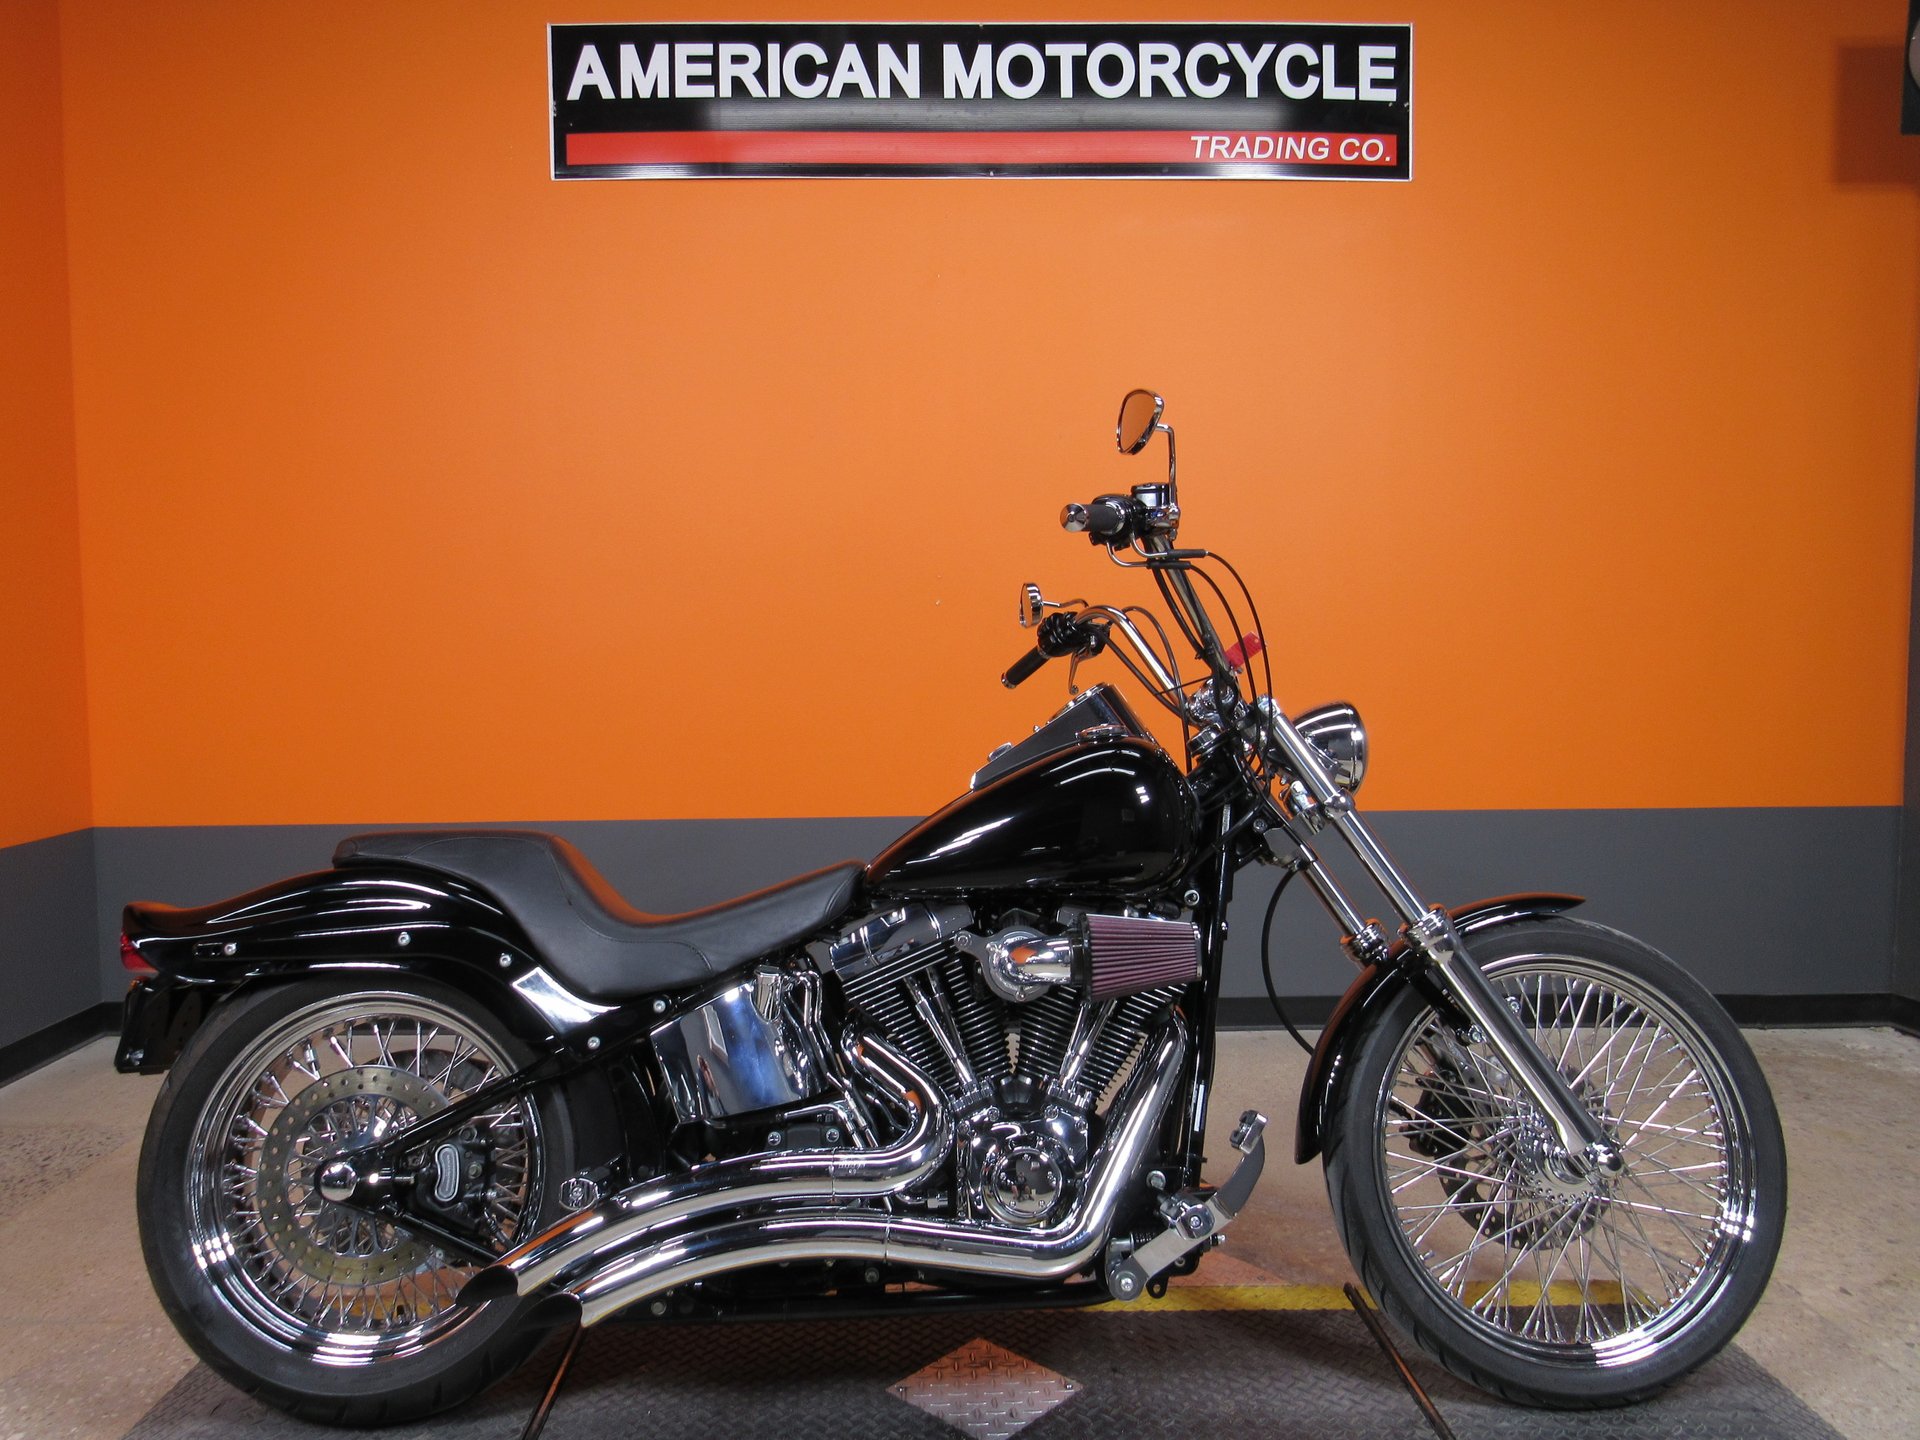 2007 Harley-Davidson Softail Custom | American Motorcycle Trading Company -  Used Harley Davidson Motorcycles